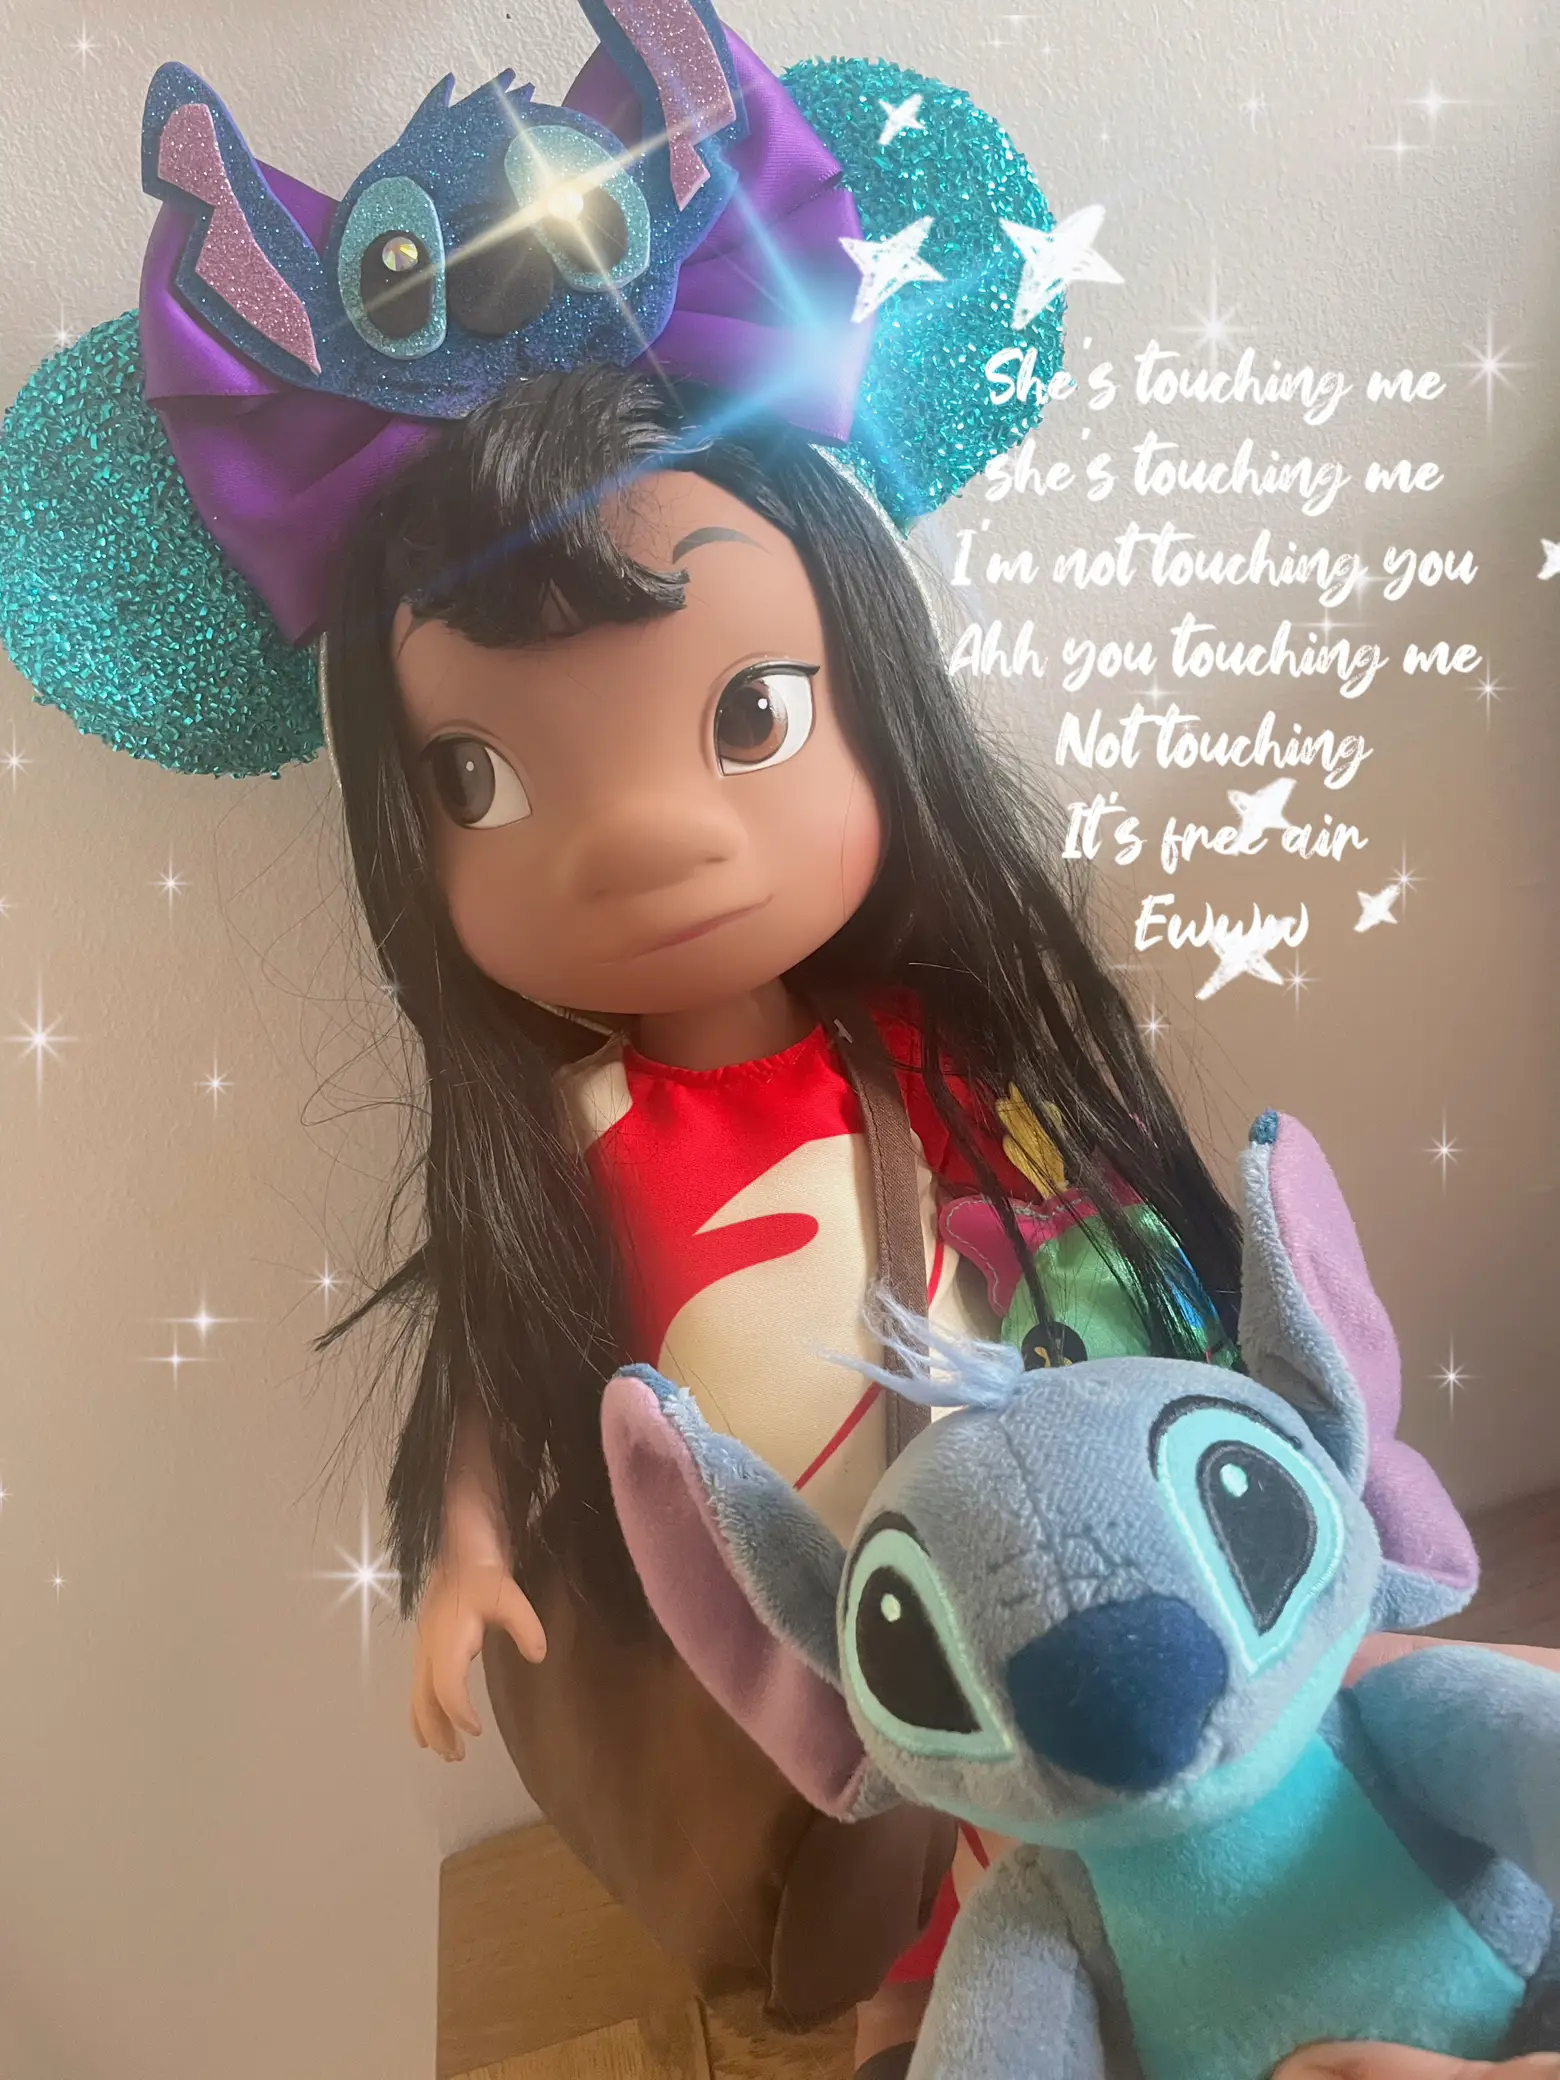 Disney Store Lilo Animator Doll, Lilo & Stitch